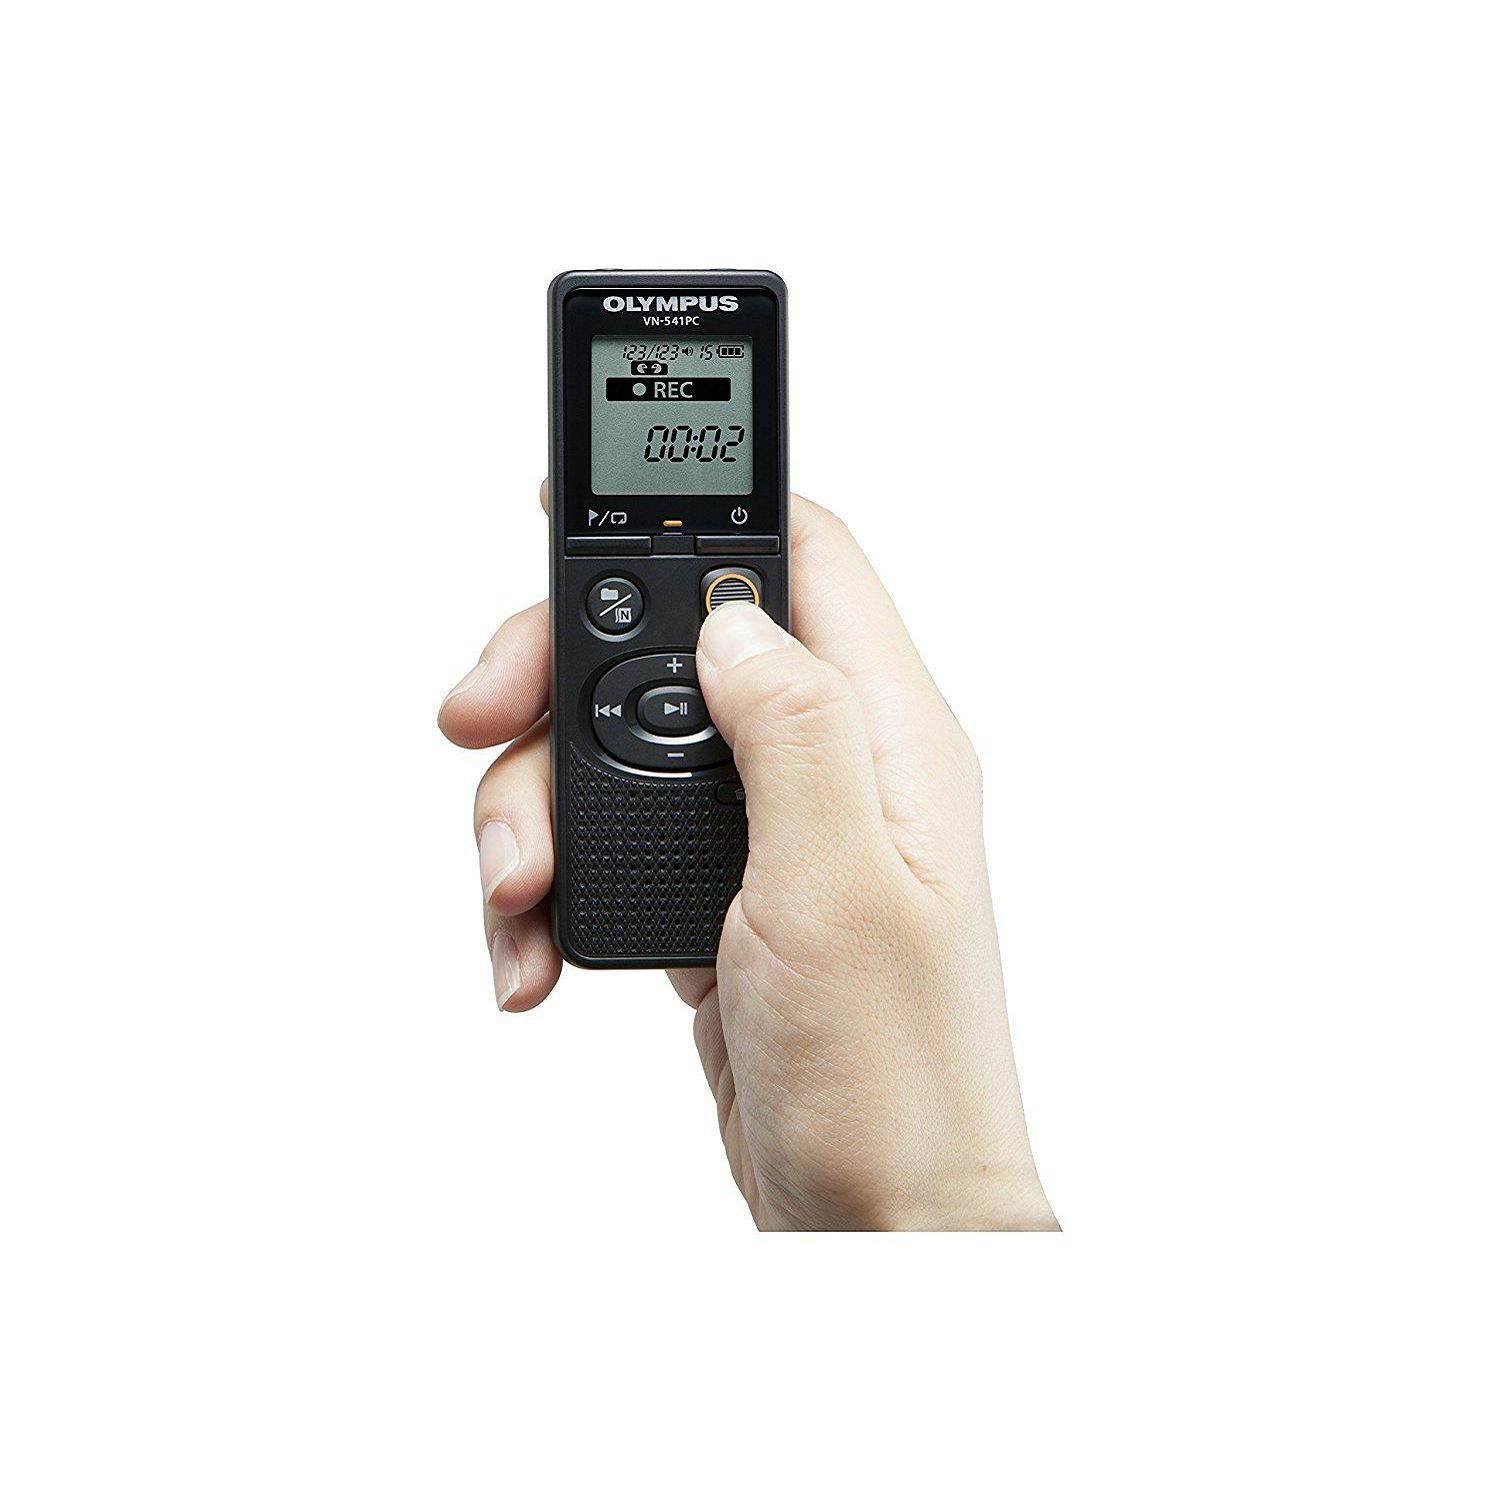 Olympus VN-541PC with DNS12 Speech Recognition Software (European Kit) prijenosni snimač zvuka Digital Voice Recorder (V405281BE030)